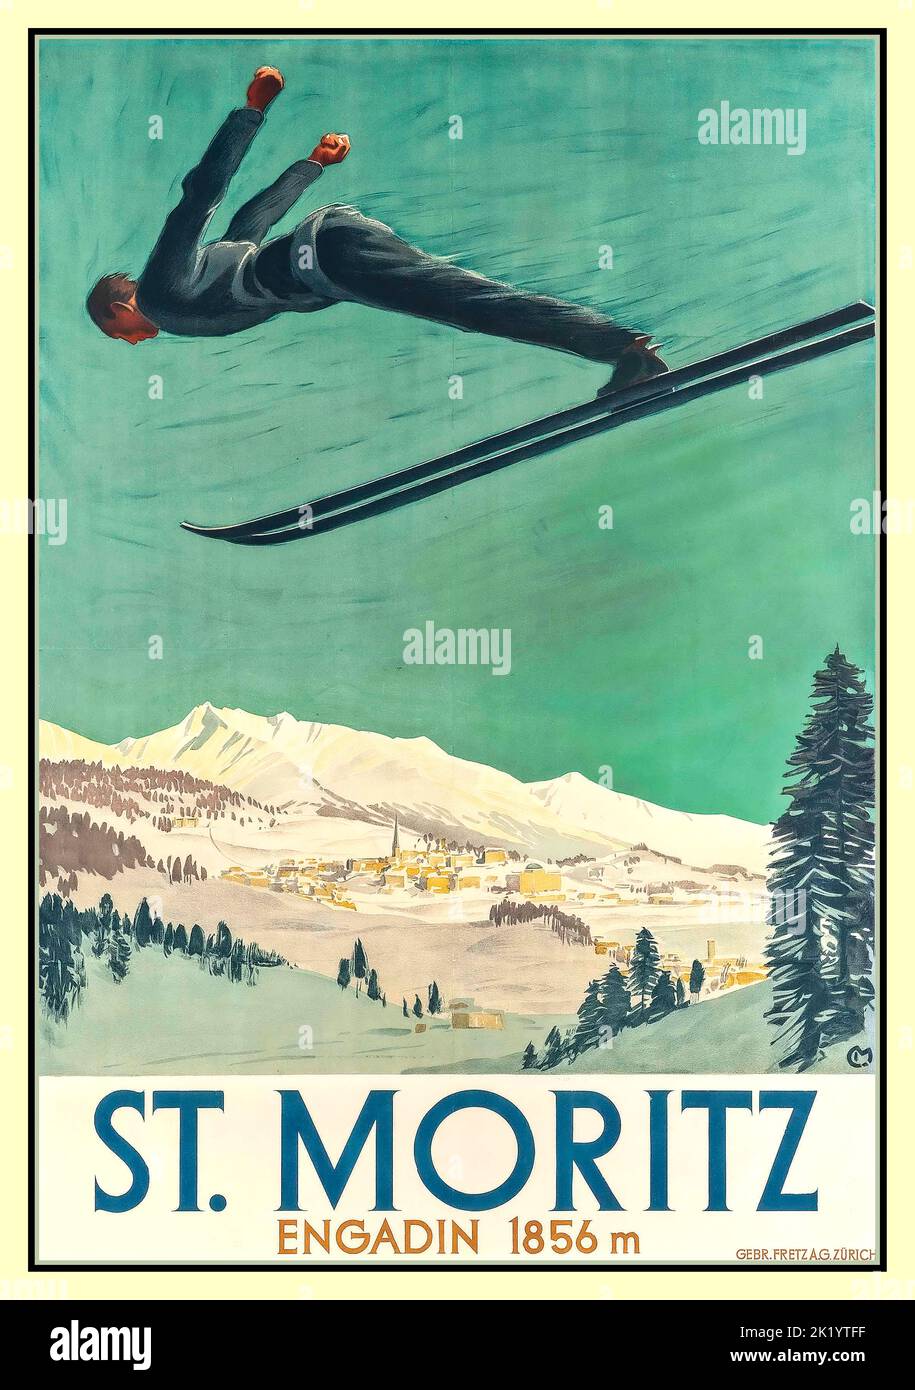 ST. MORITZ SKI JUMP VINTAGE 1900s sport invernali ski jump Poster di Carl Moos (1878-1959) litografia di St Moritz, Engadina Valley a 1856M Svizzera Foto Stock